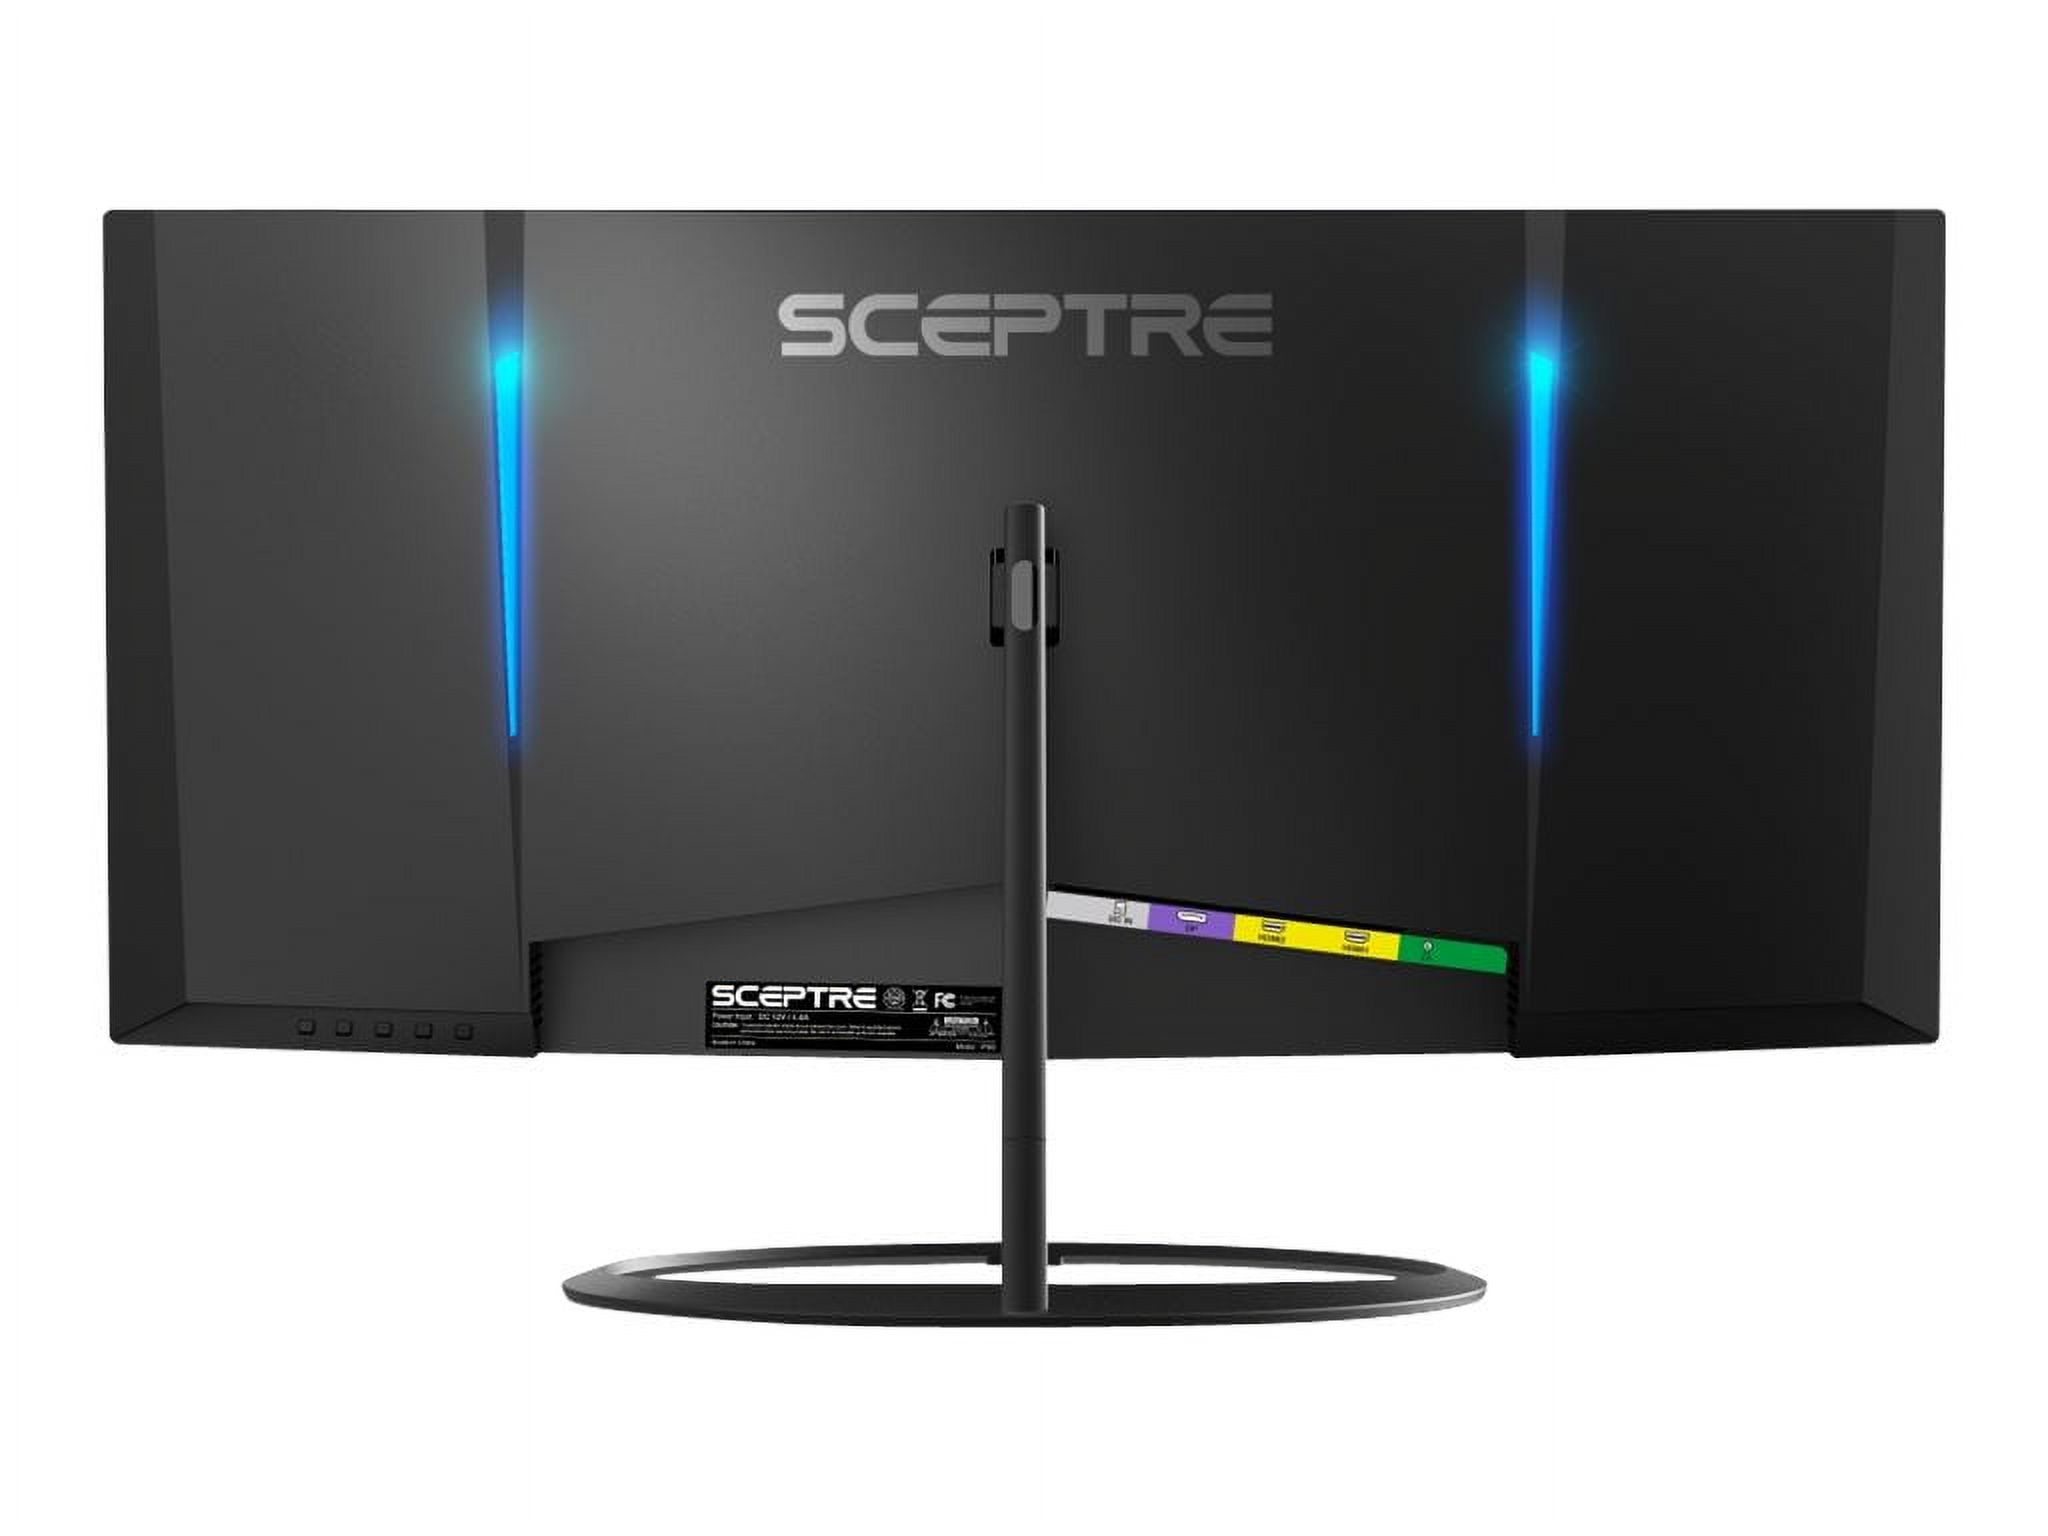 Sceptre C305W-2560UN, LED Monitor, Curved, 30", 2560 x 1080 @ 85 Hz, VA, 250 cd/m, 3000:1, 1 ms, 2xHDMI, DisplayPort, Speakers, Black - image 4 of 5